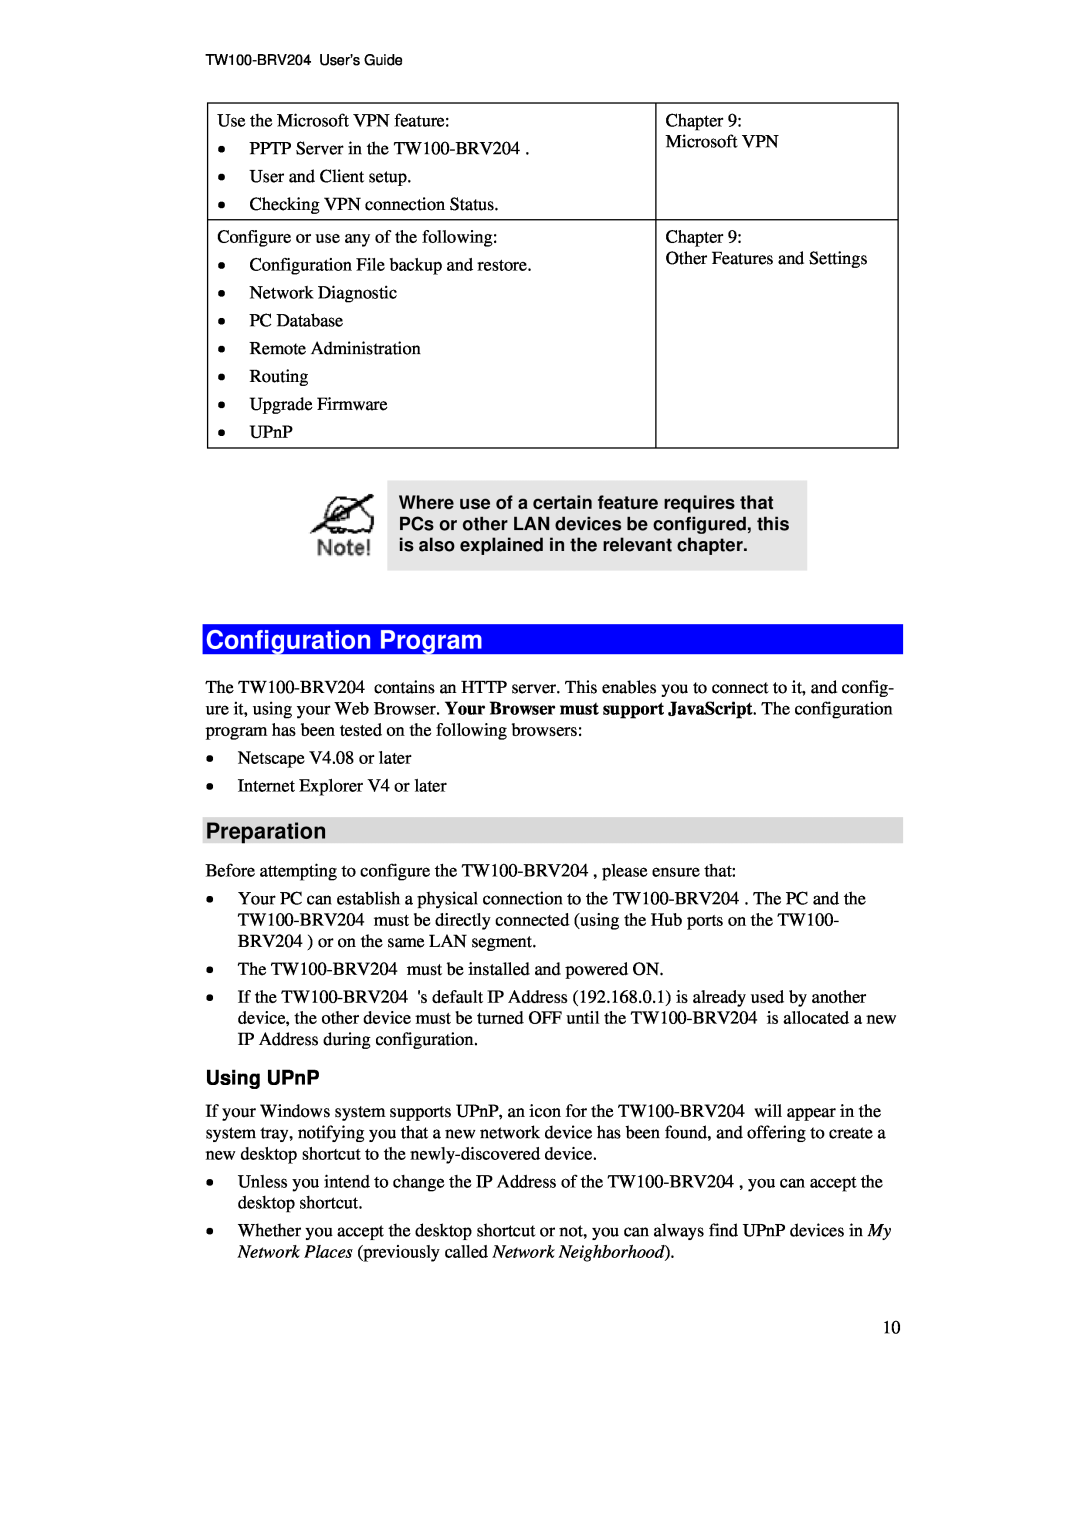 TRENDnet BRV204 manual Configuration Program, Preparation 